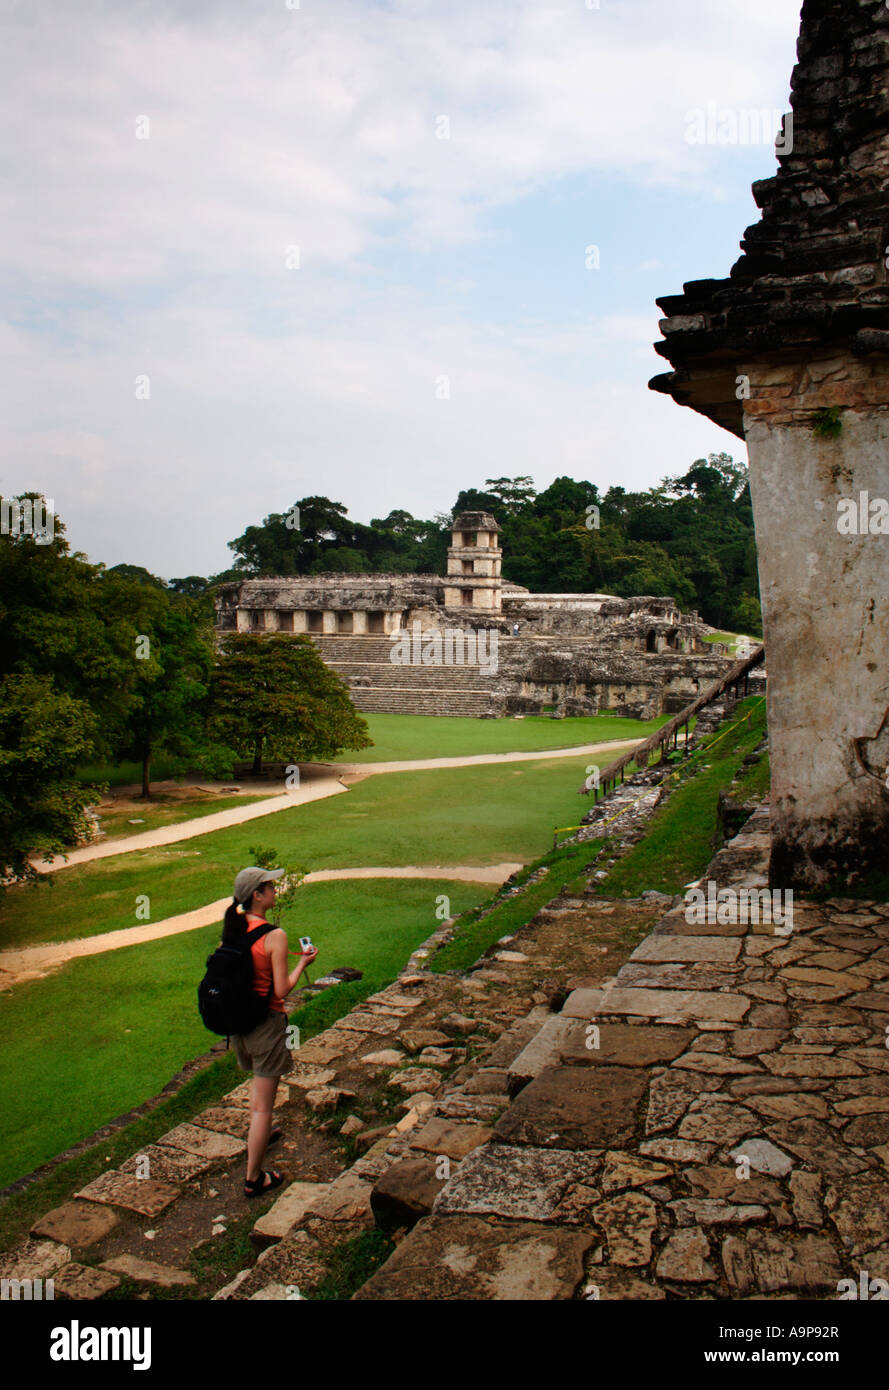 Wiew des Palastes aus dem Tempel des Schädels, Palenque, archäologische Maya Ruine, Chiapas, Mexiko Stockfoto